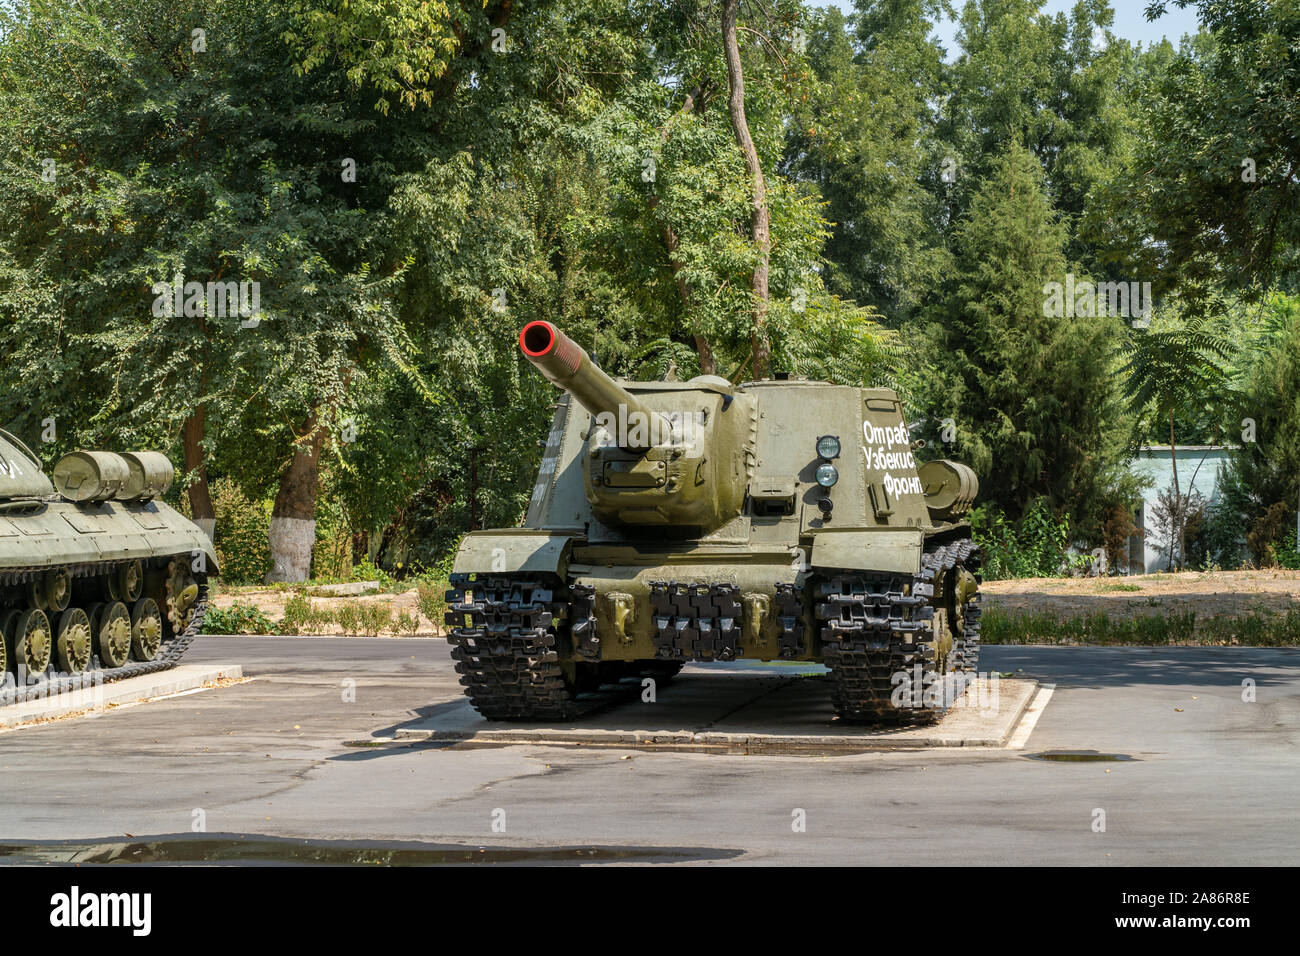 Tashkent, Uzbekistan - September 03, 2018: Old Soviet Union tank, SPG, that was used during WW2, outdoor military museum Stock Photo